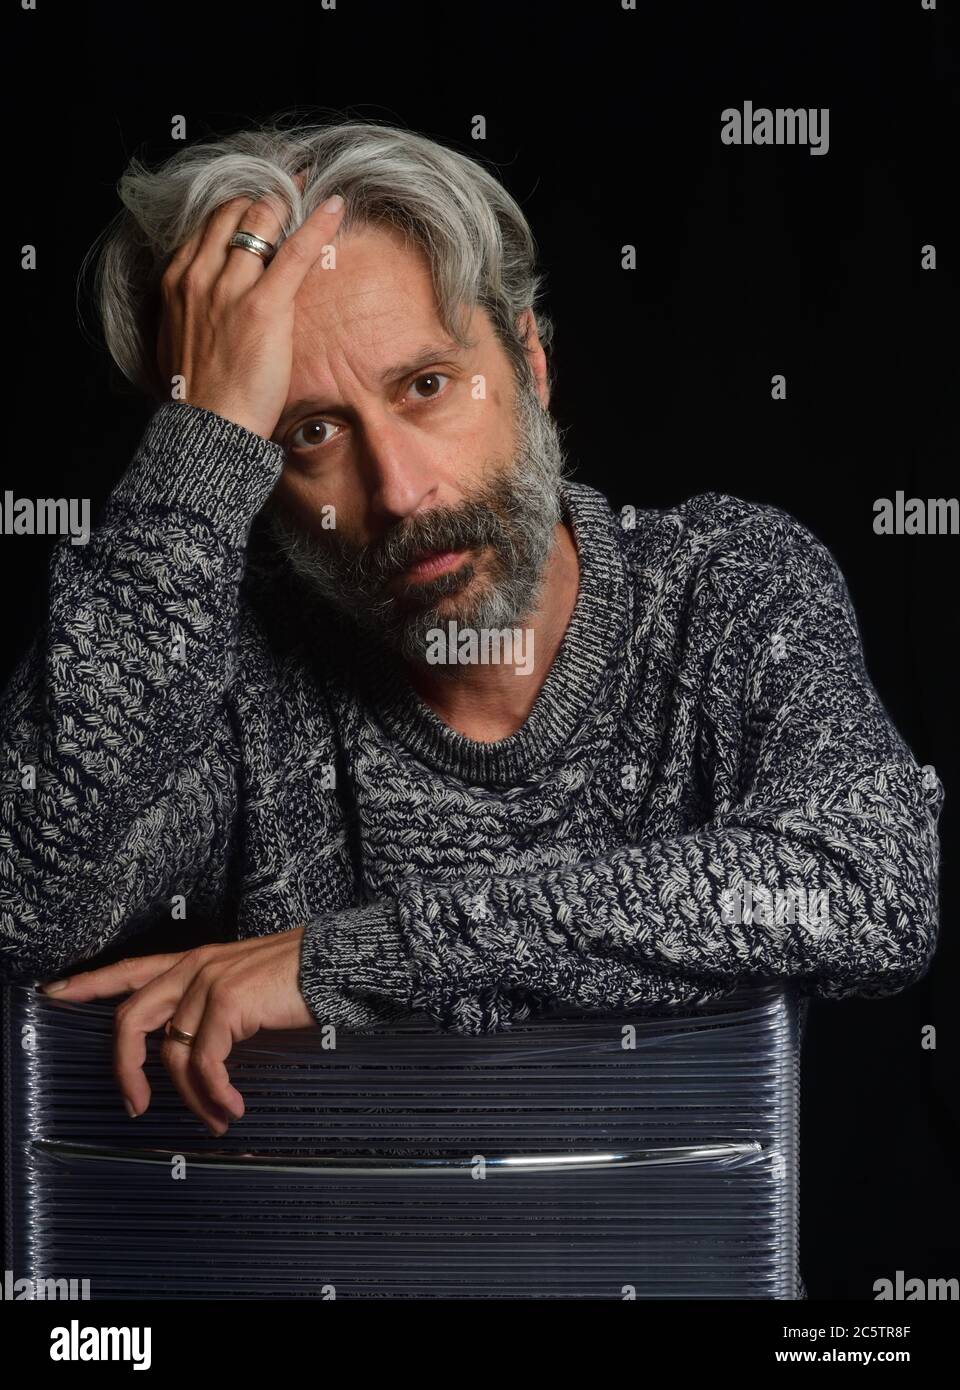 Sad male with grey hair and beard Stock Photo